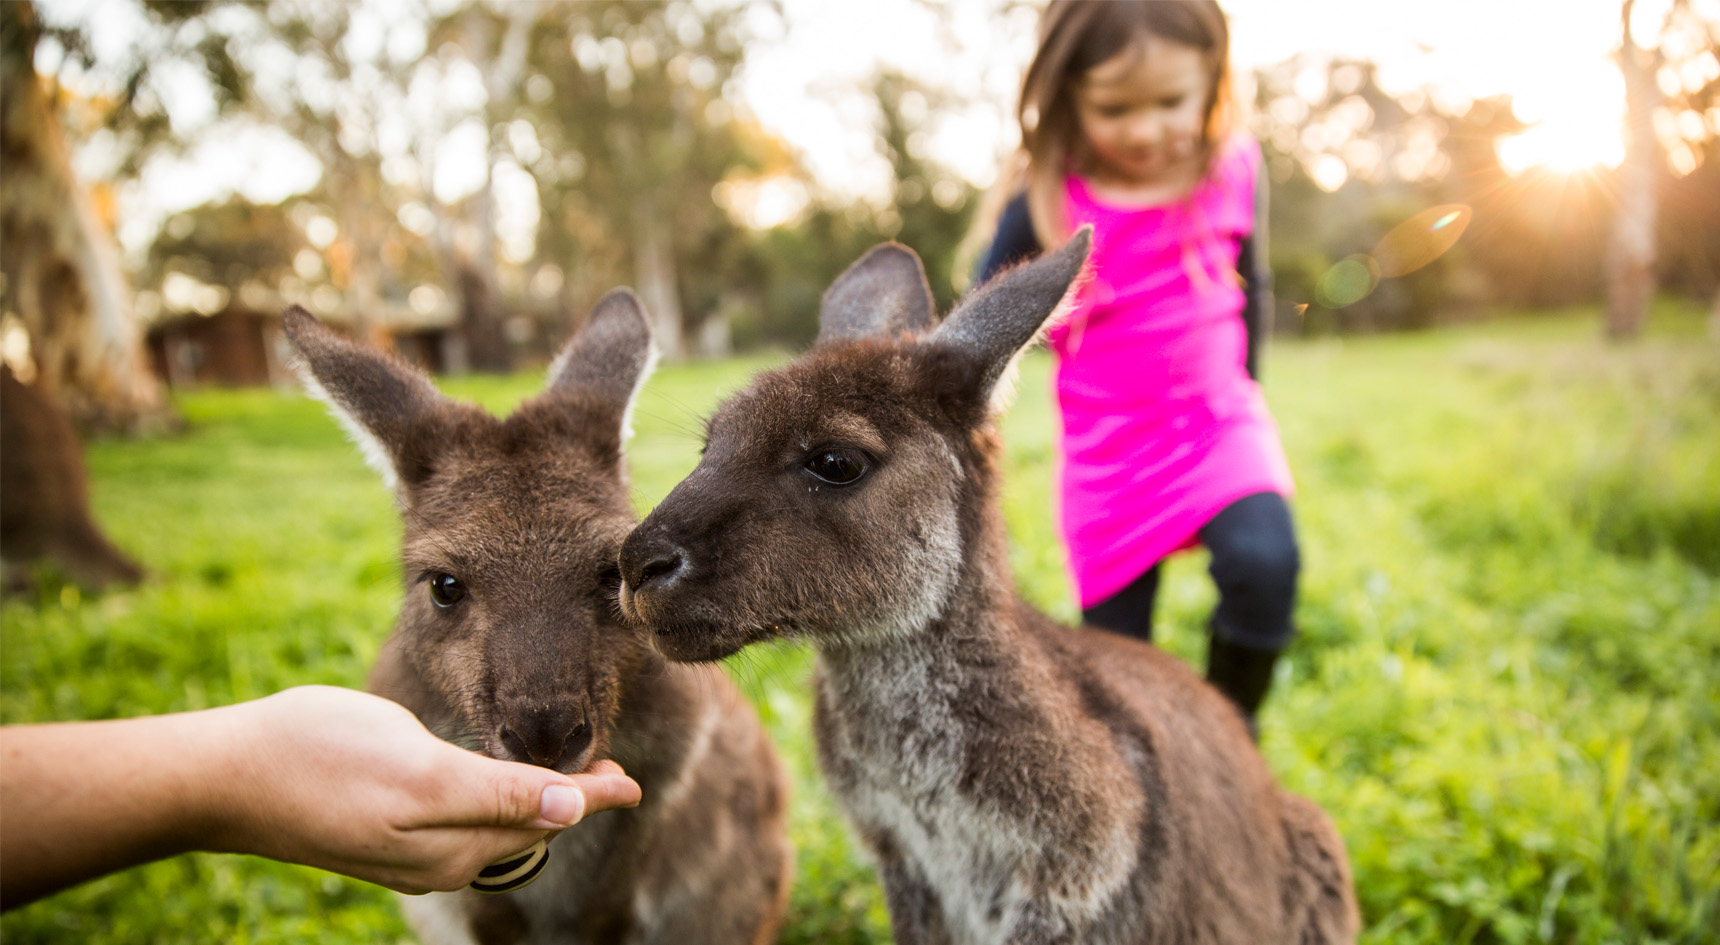 Feeding kangaroos at Woodstock Wine Estate.